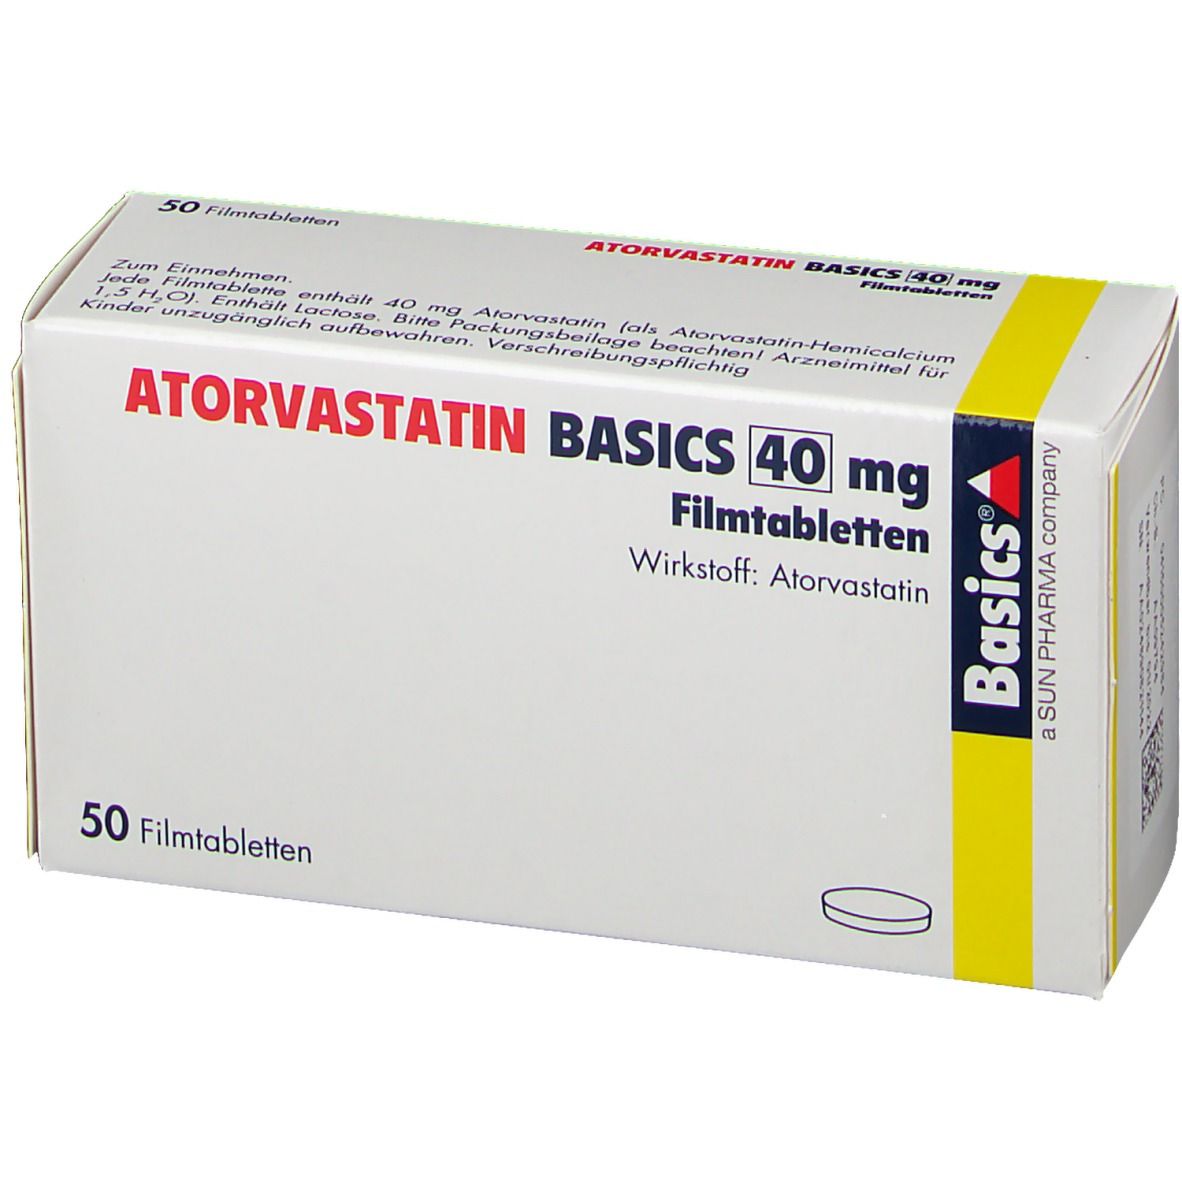 ATORVASTATIN BASICS 40 mg